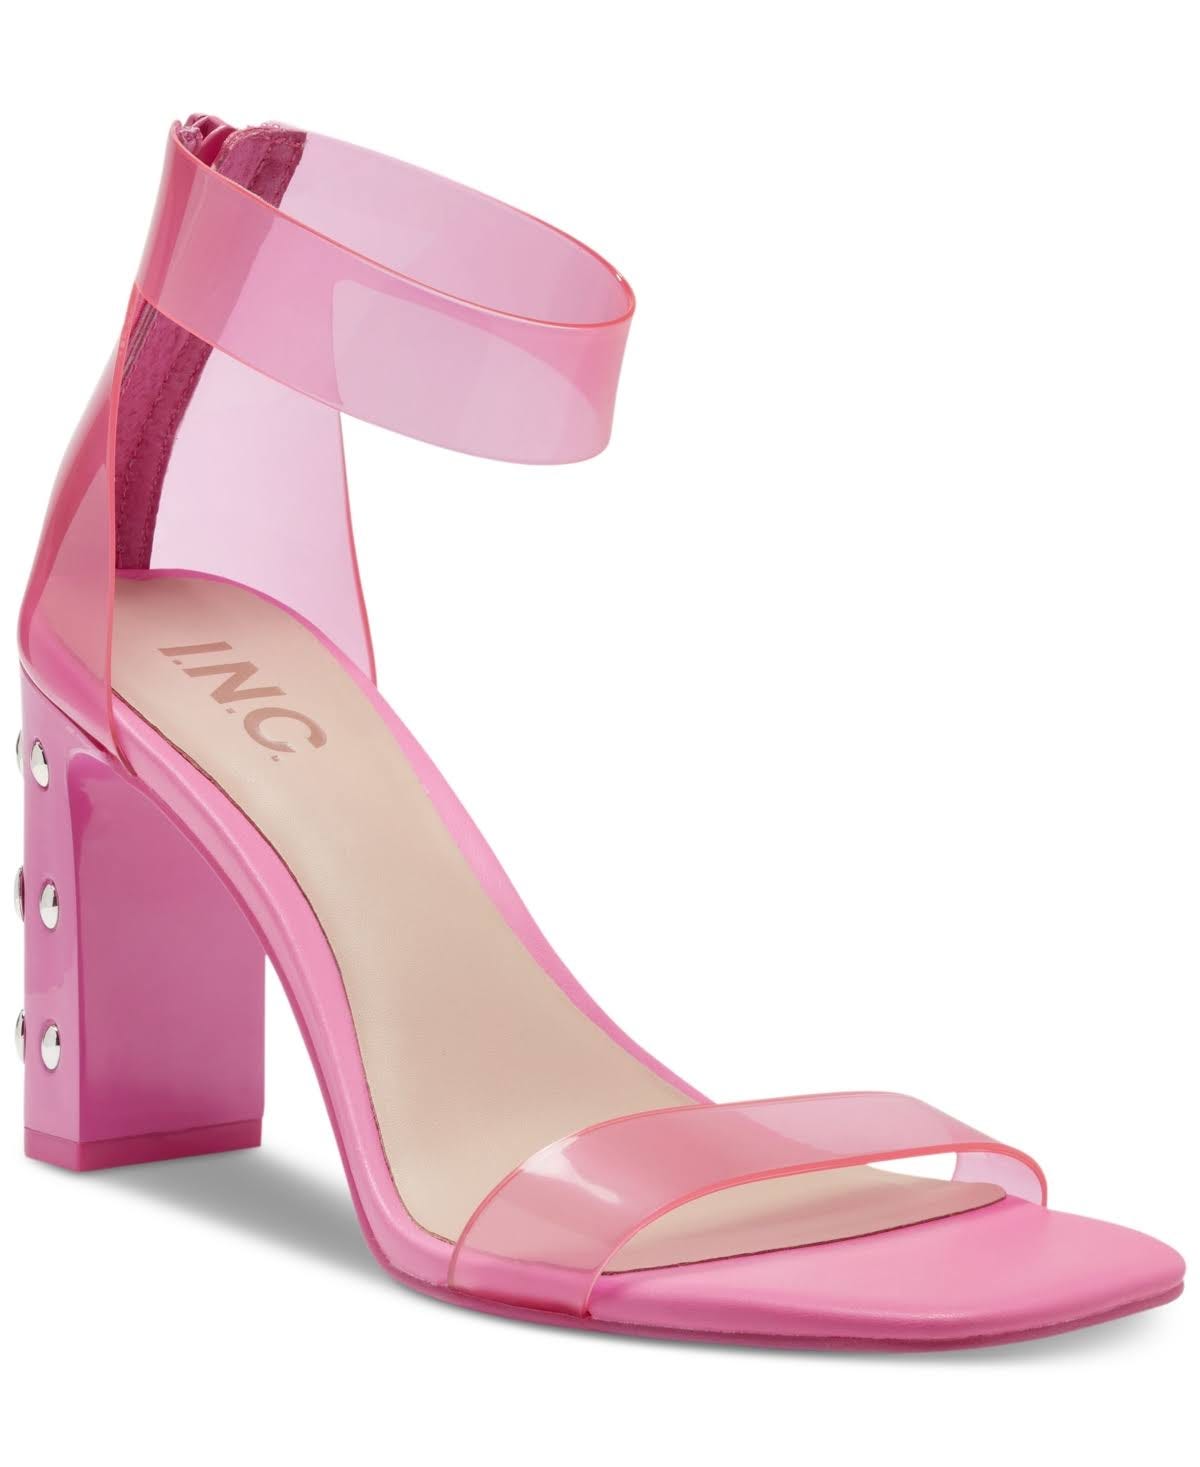 Stylish Clear Pink Studded Dress Heel Sandal by INC | Image